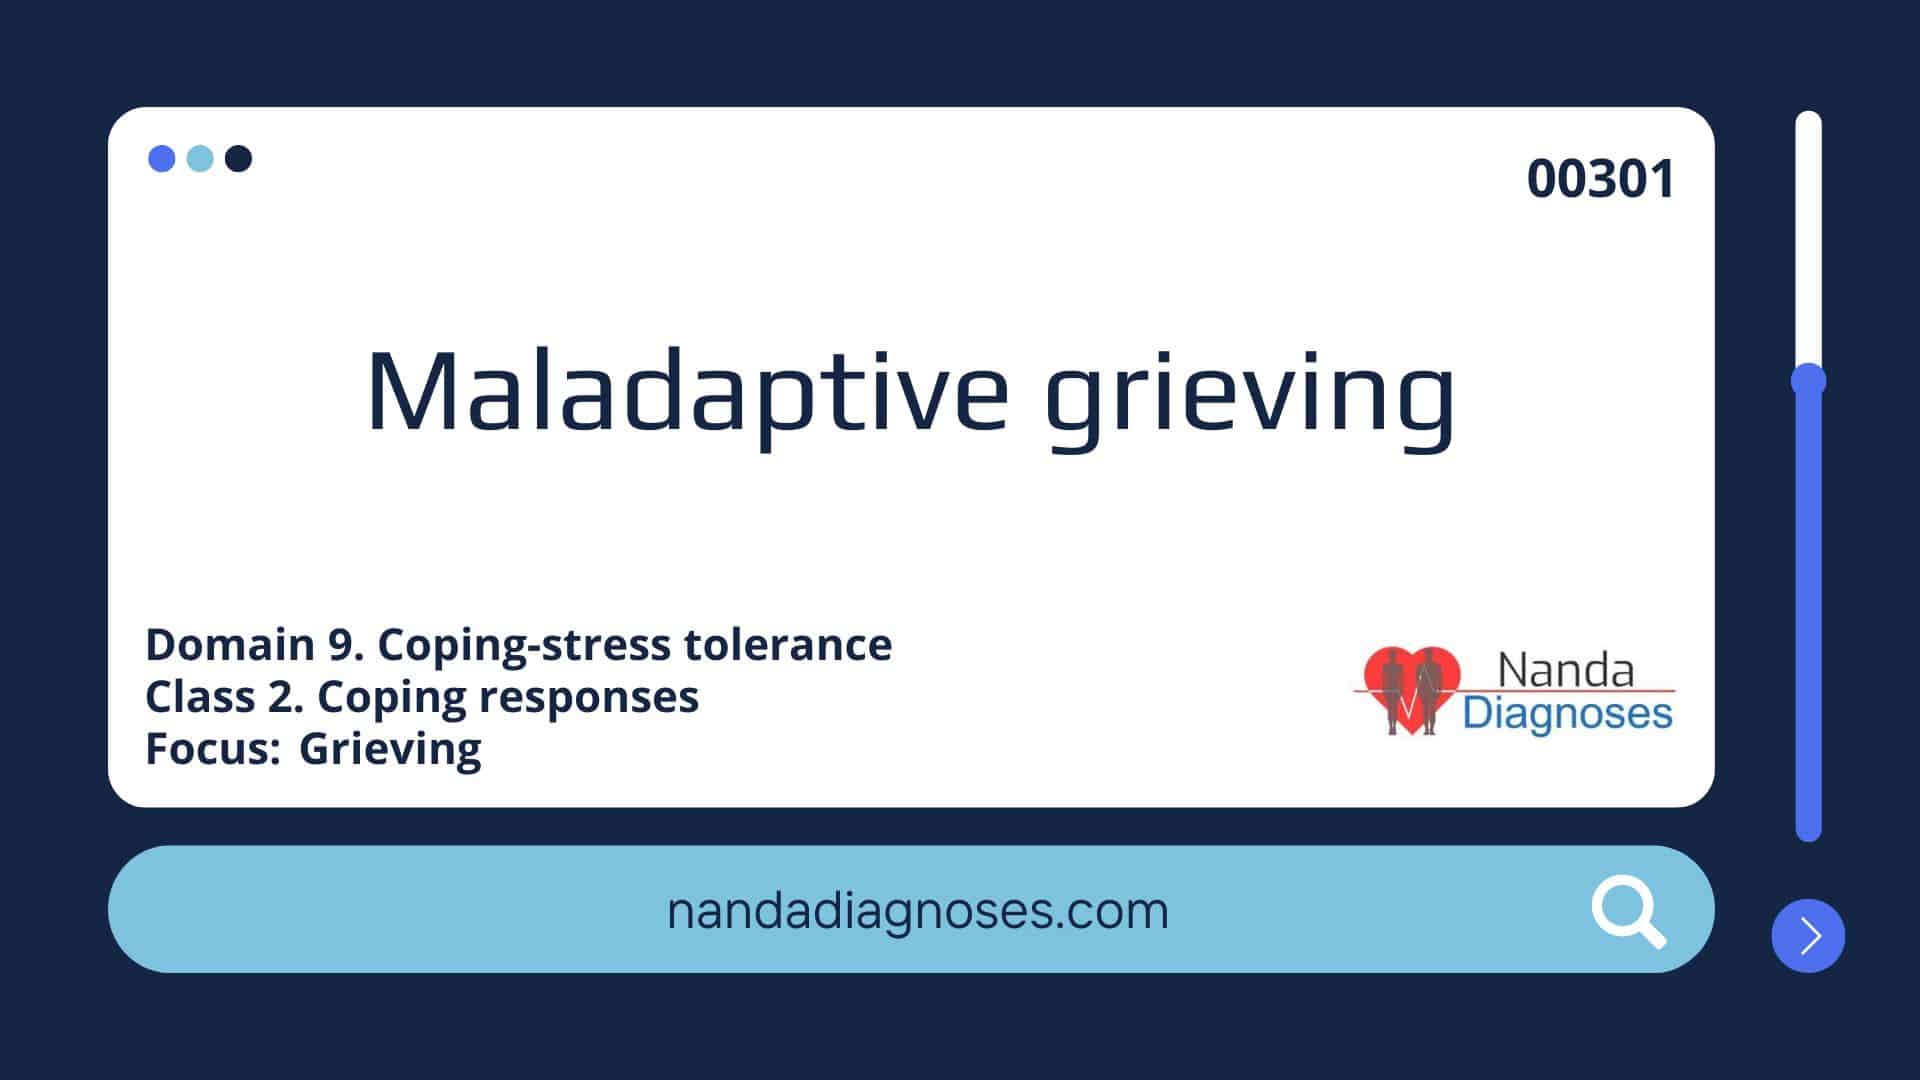 Nursing diagnosis Maladaptive grieving